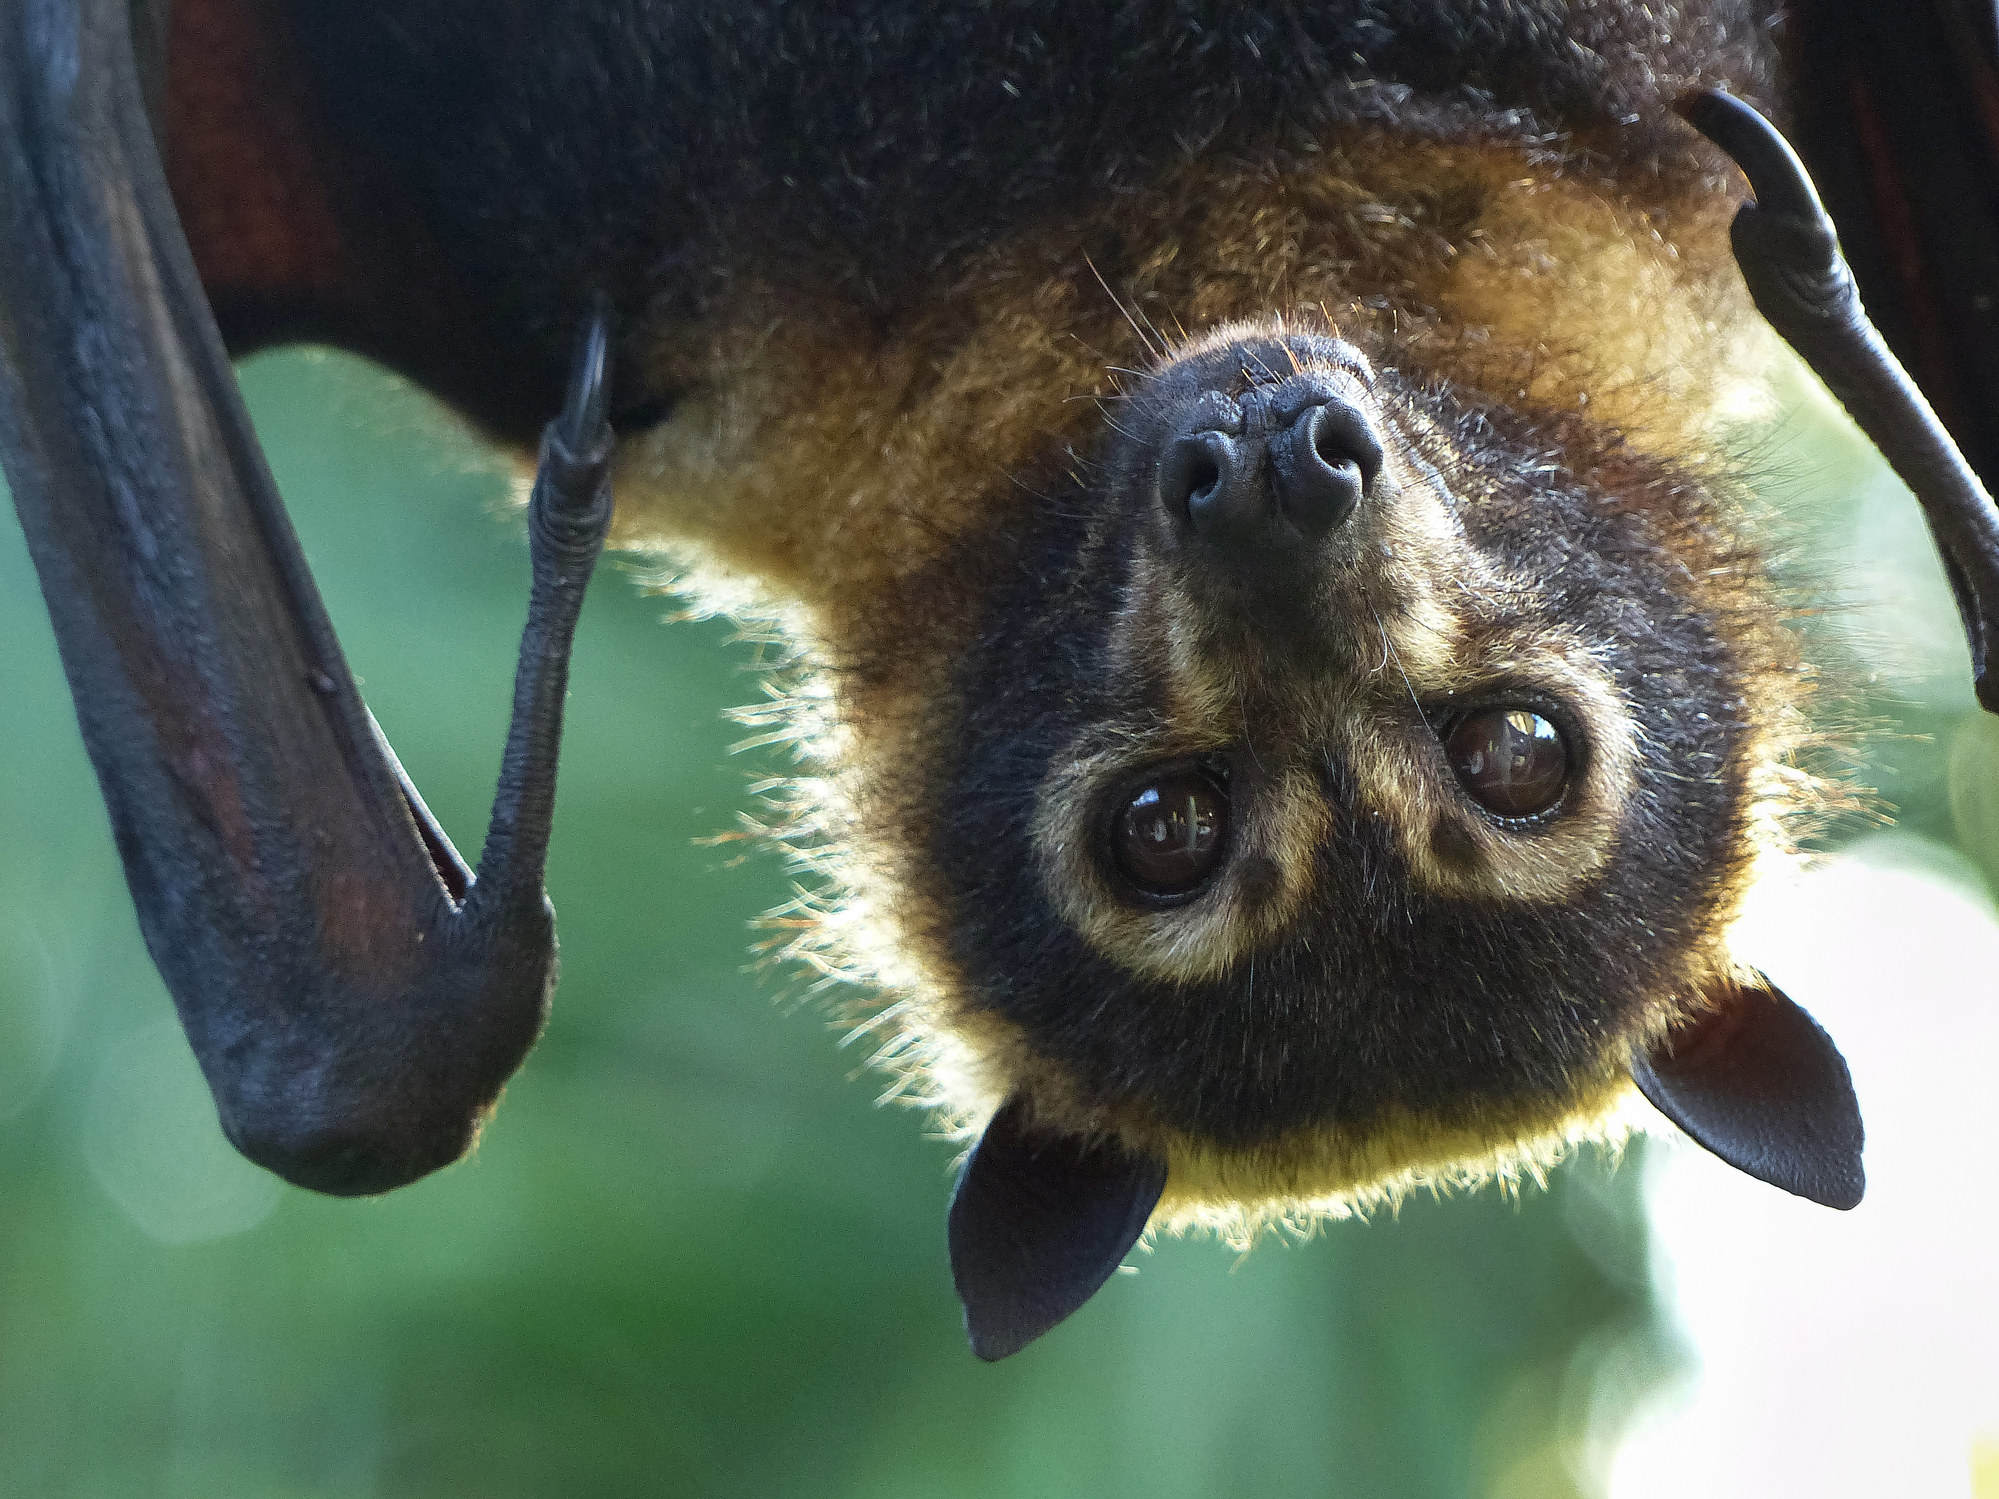 A bat upside down looking straight ahead